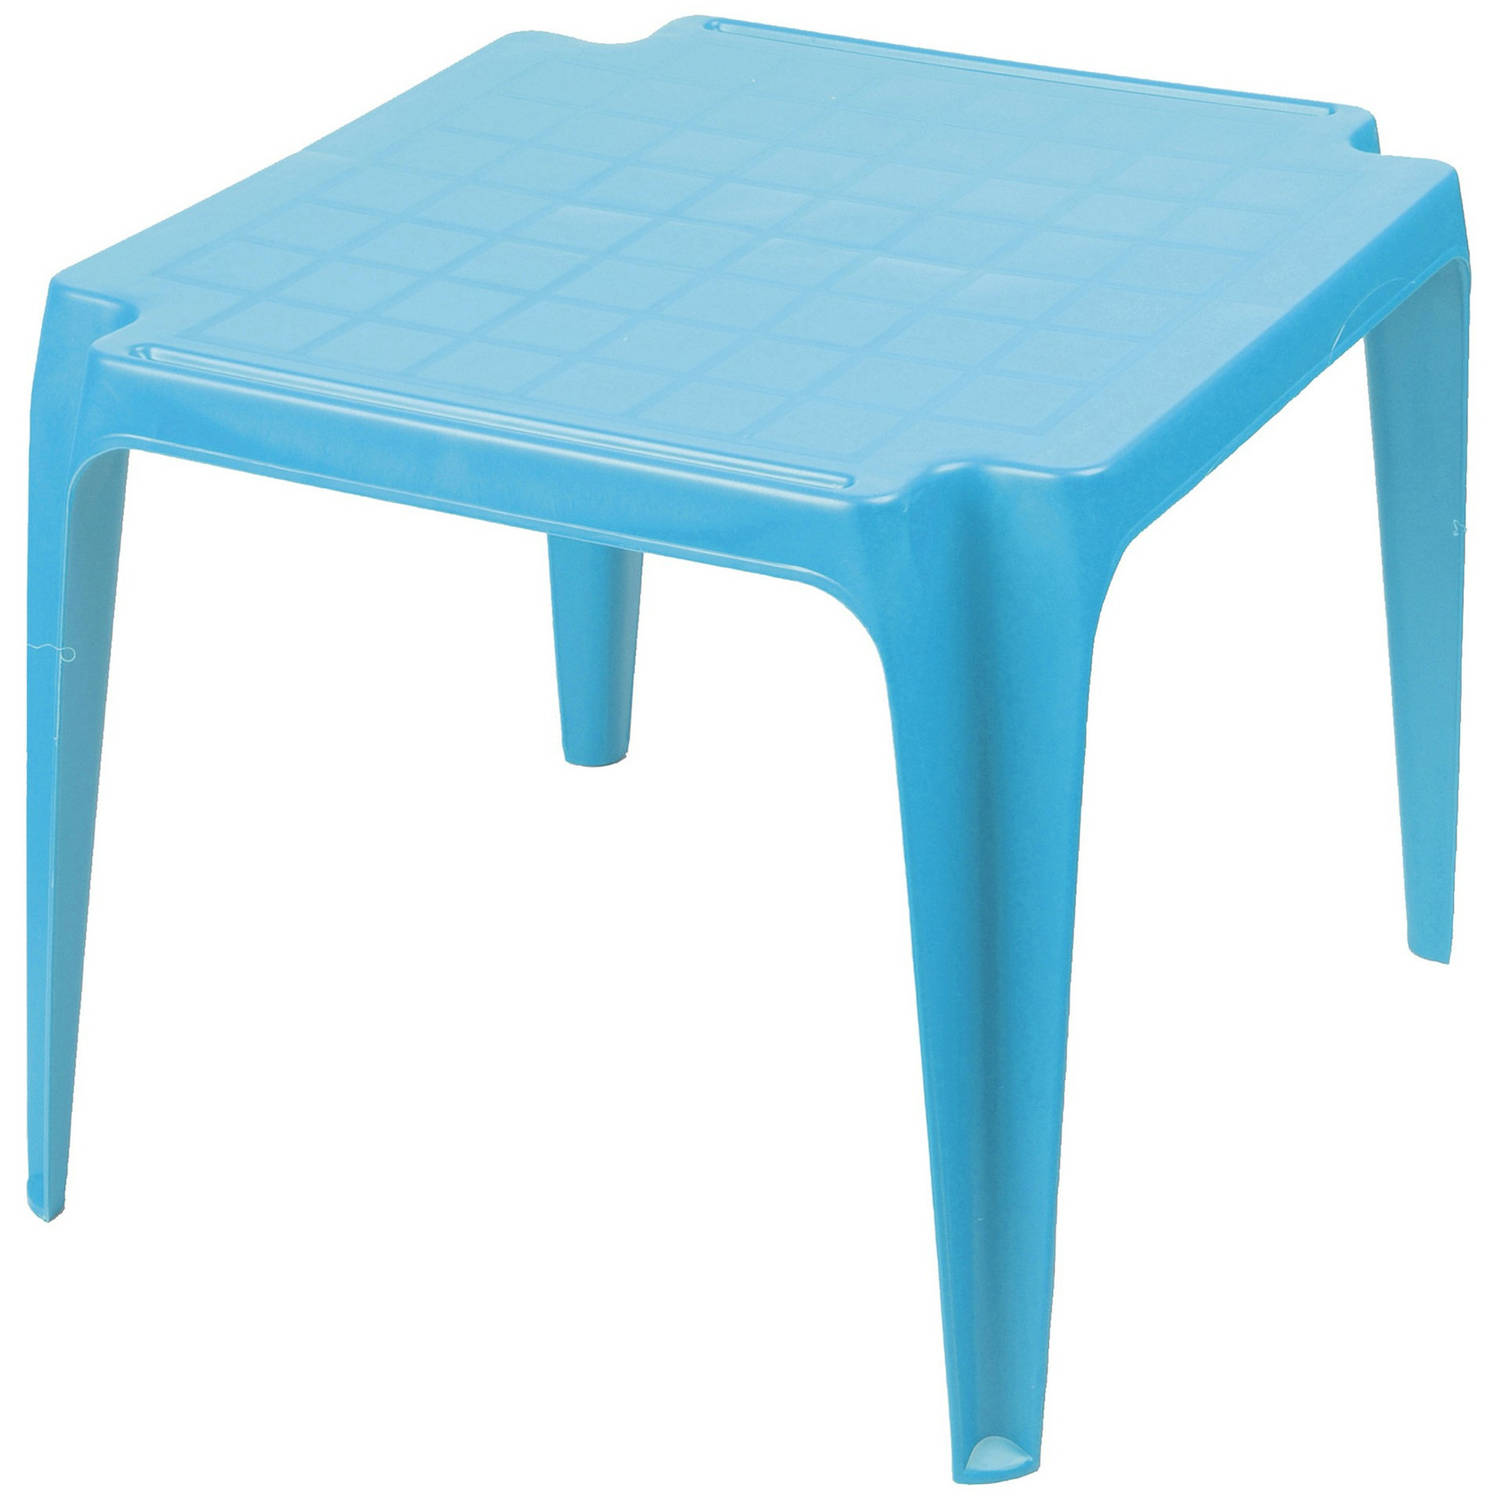 Sunnydays Kindertafel - blauw - kunststof - buiten/binnen - L56 x B51 x H44 cm - Bijzettafels